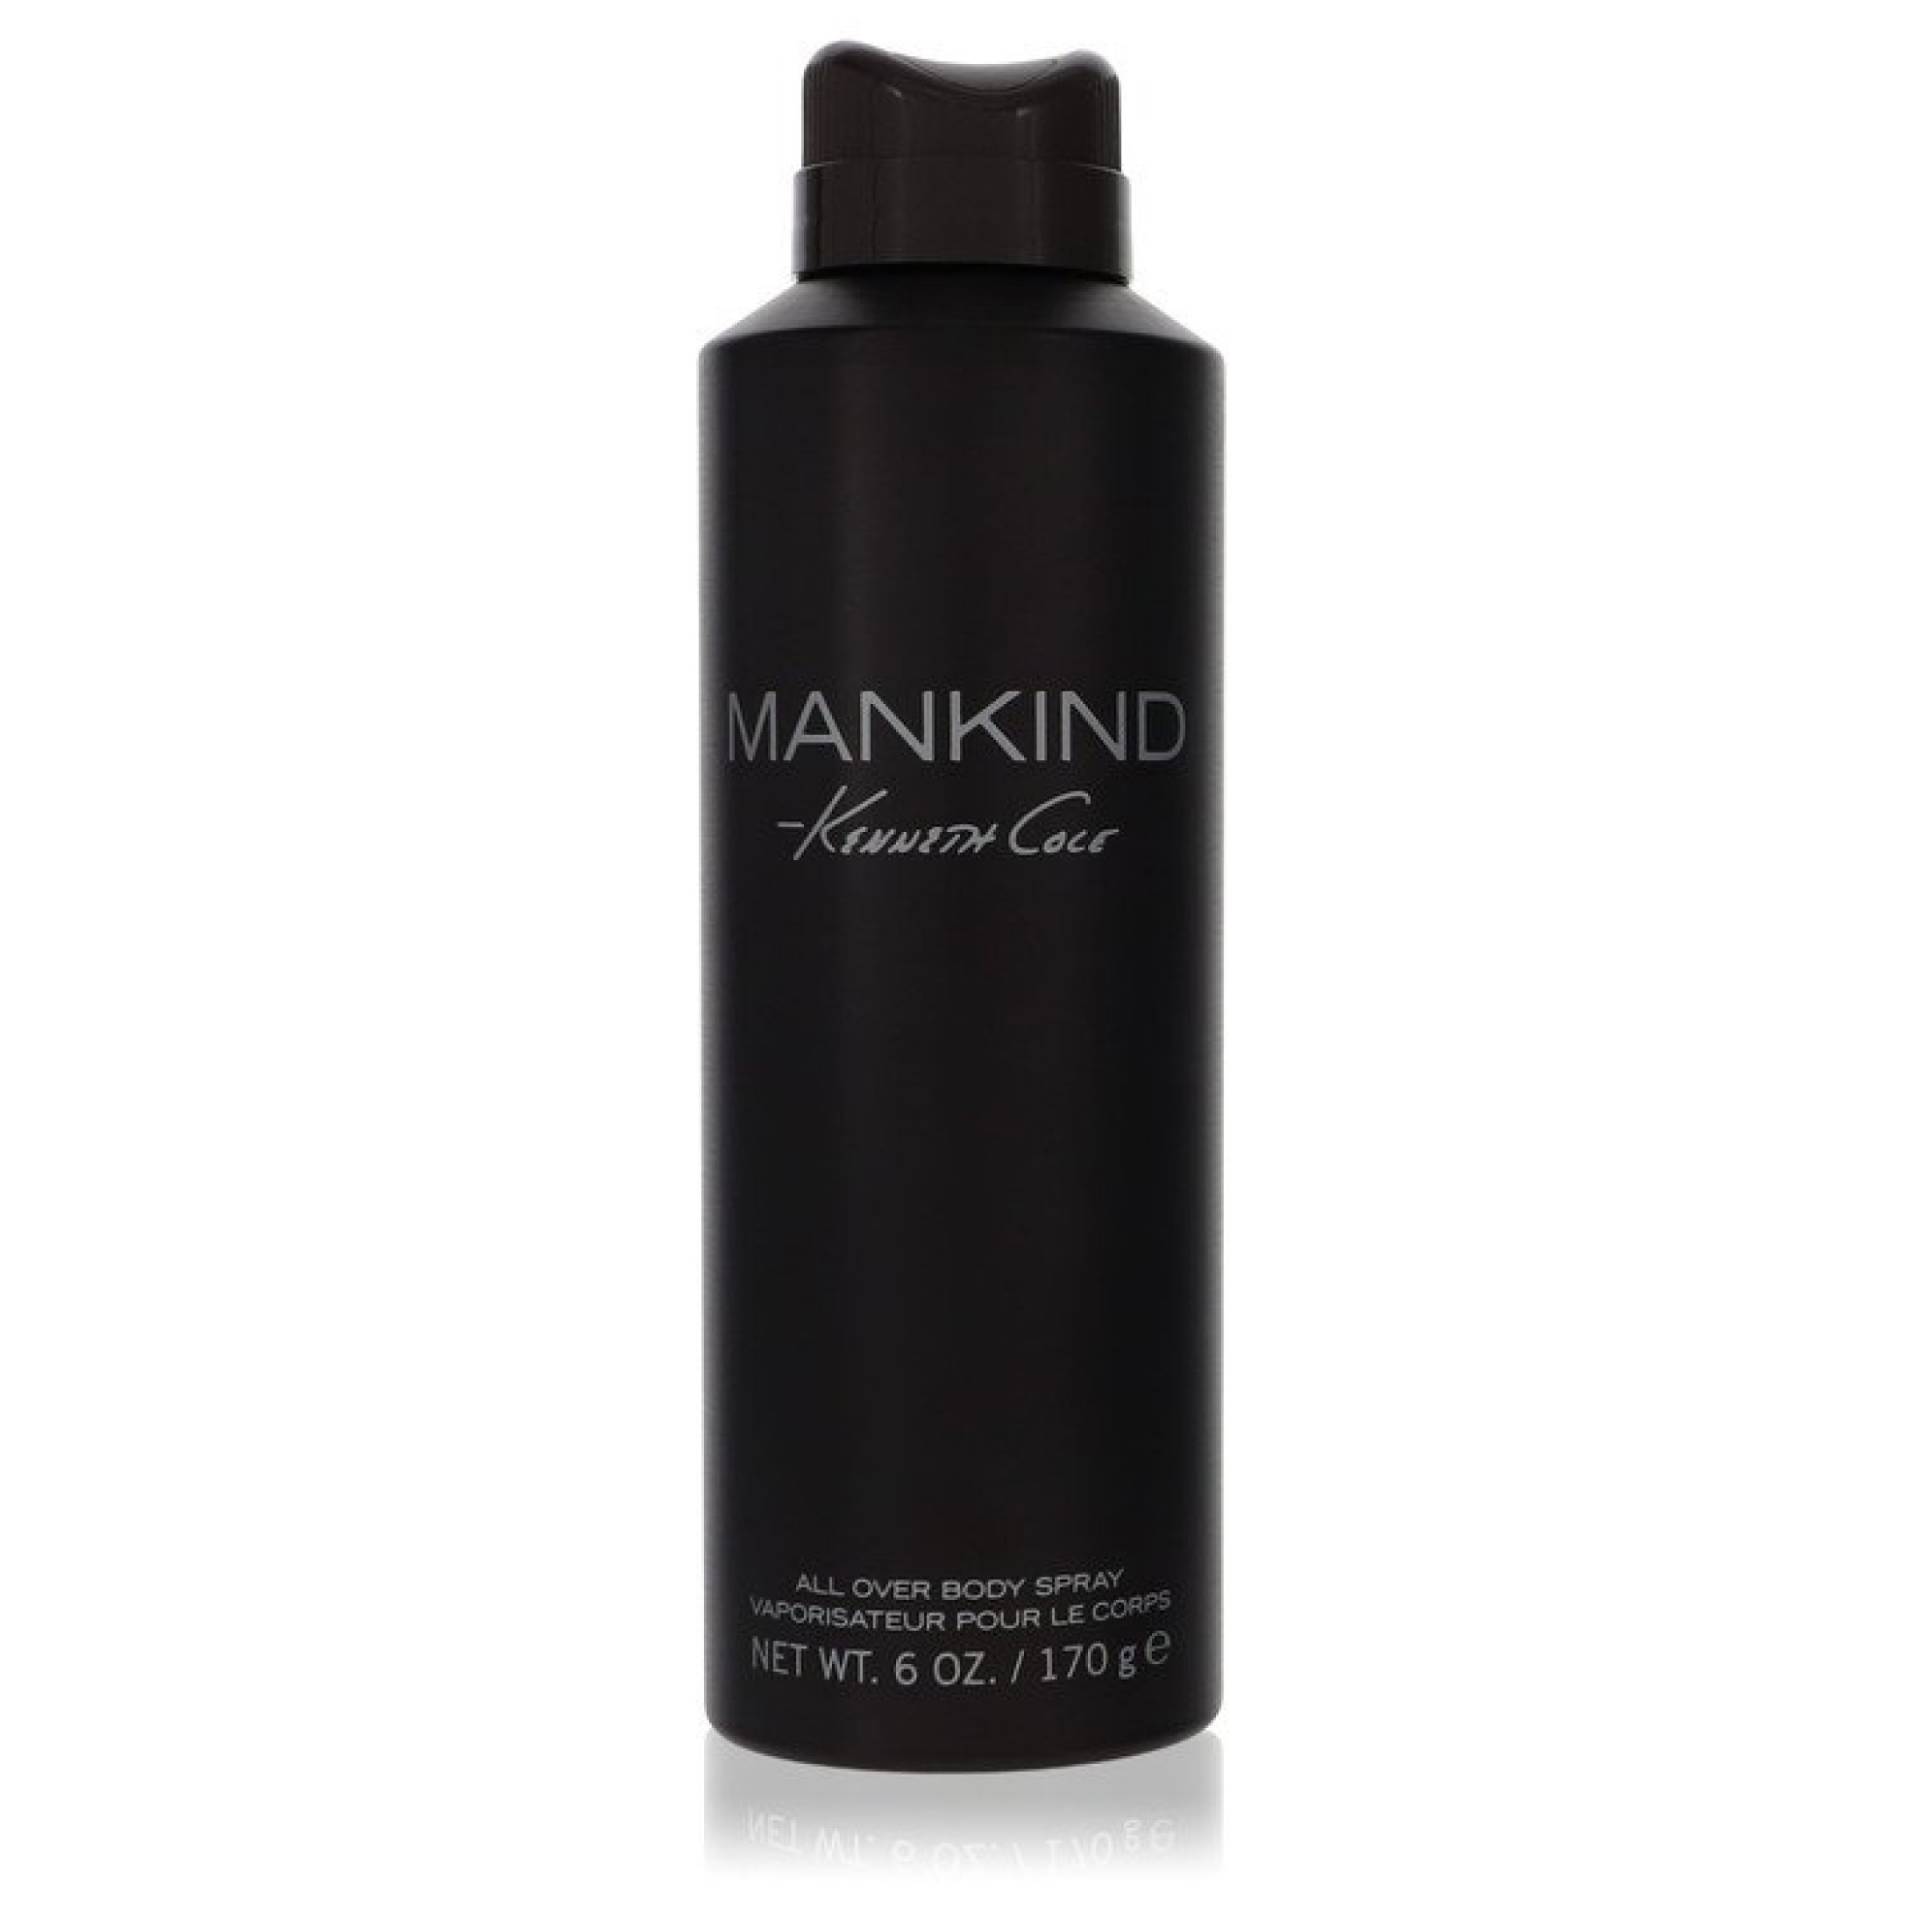 Kenneth Cole Mankind Body Spray 177 ml von Kenneth Cole